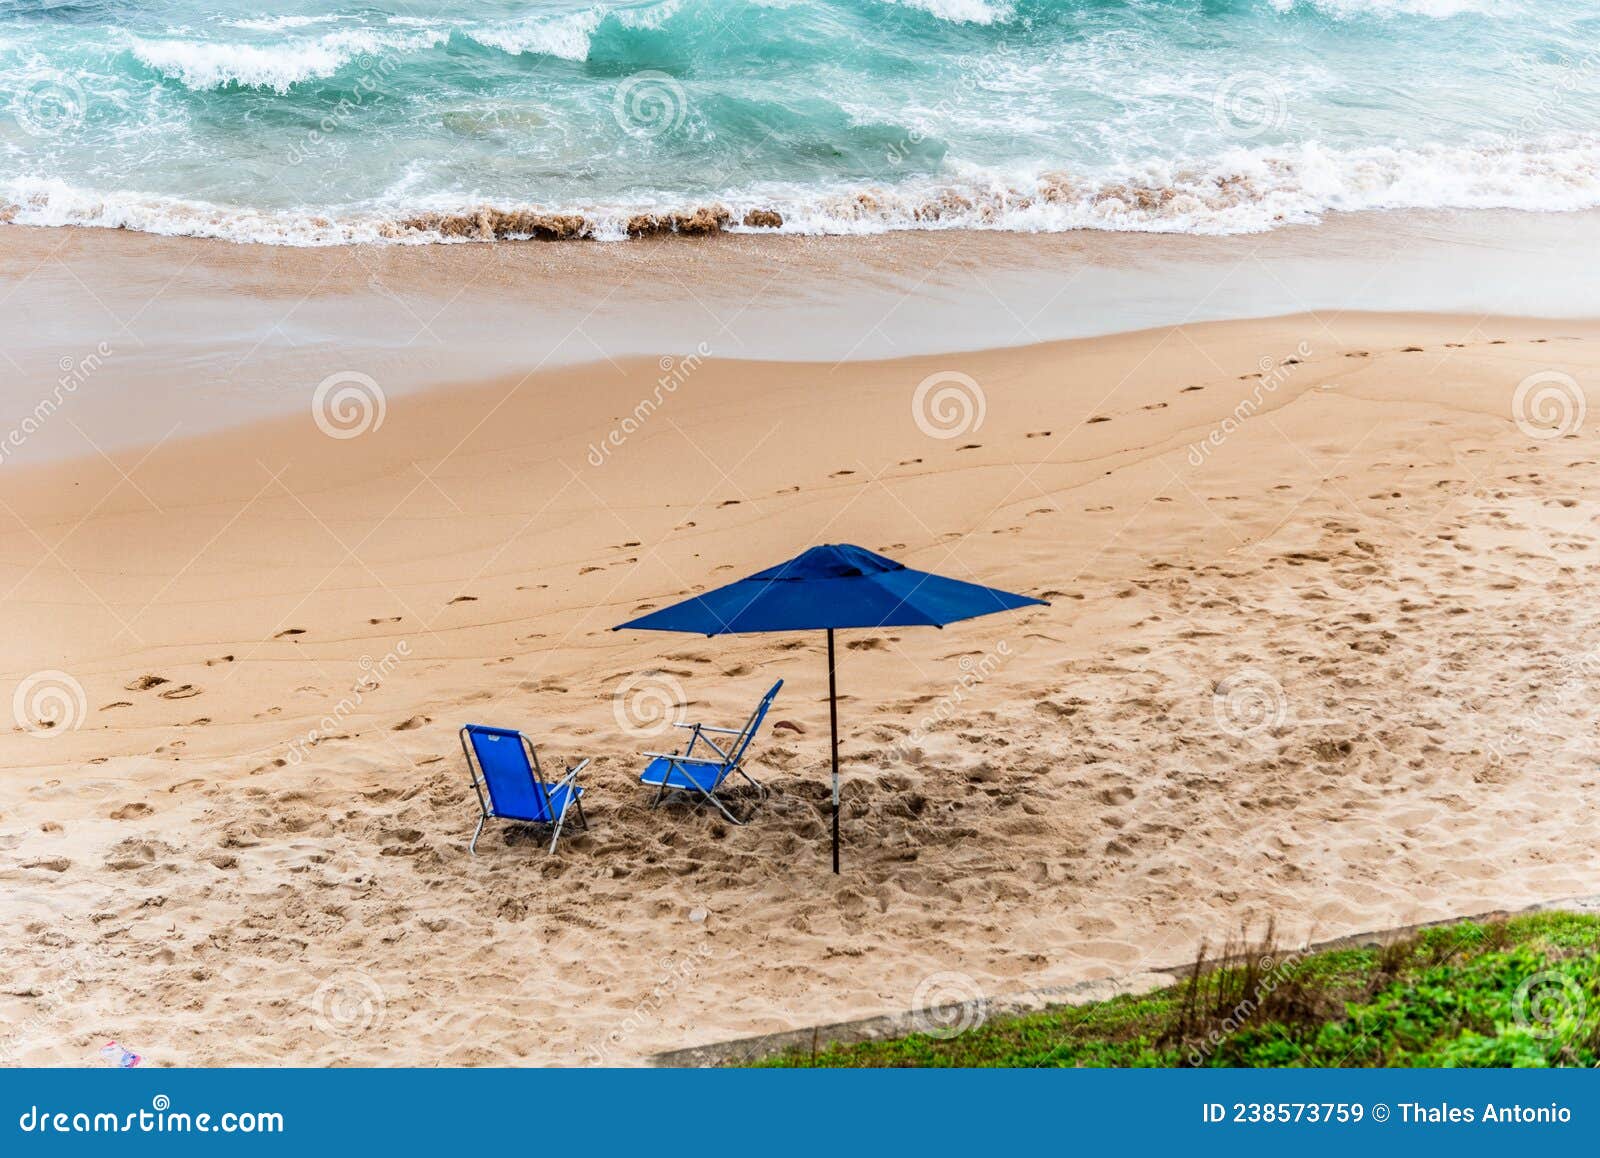 blue parasol on the sand of paciencia beach in the rio vermelho